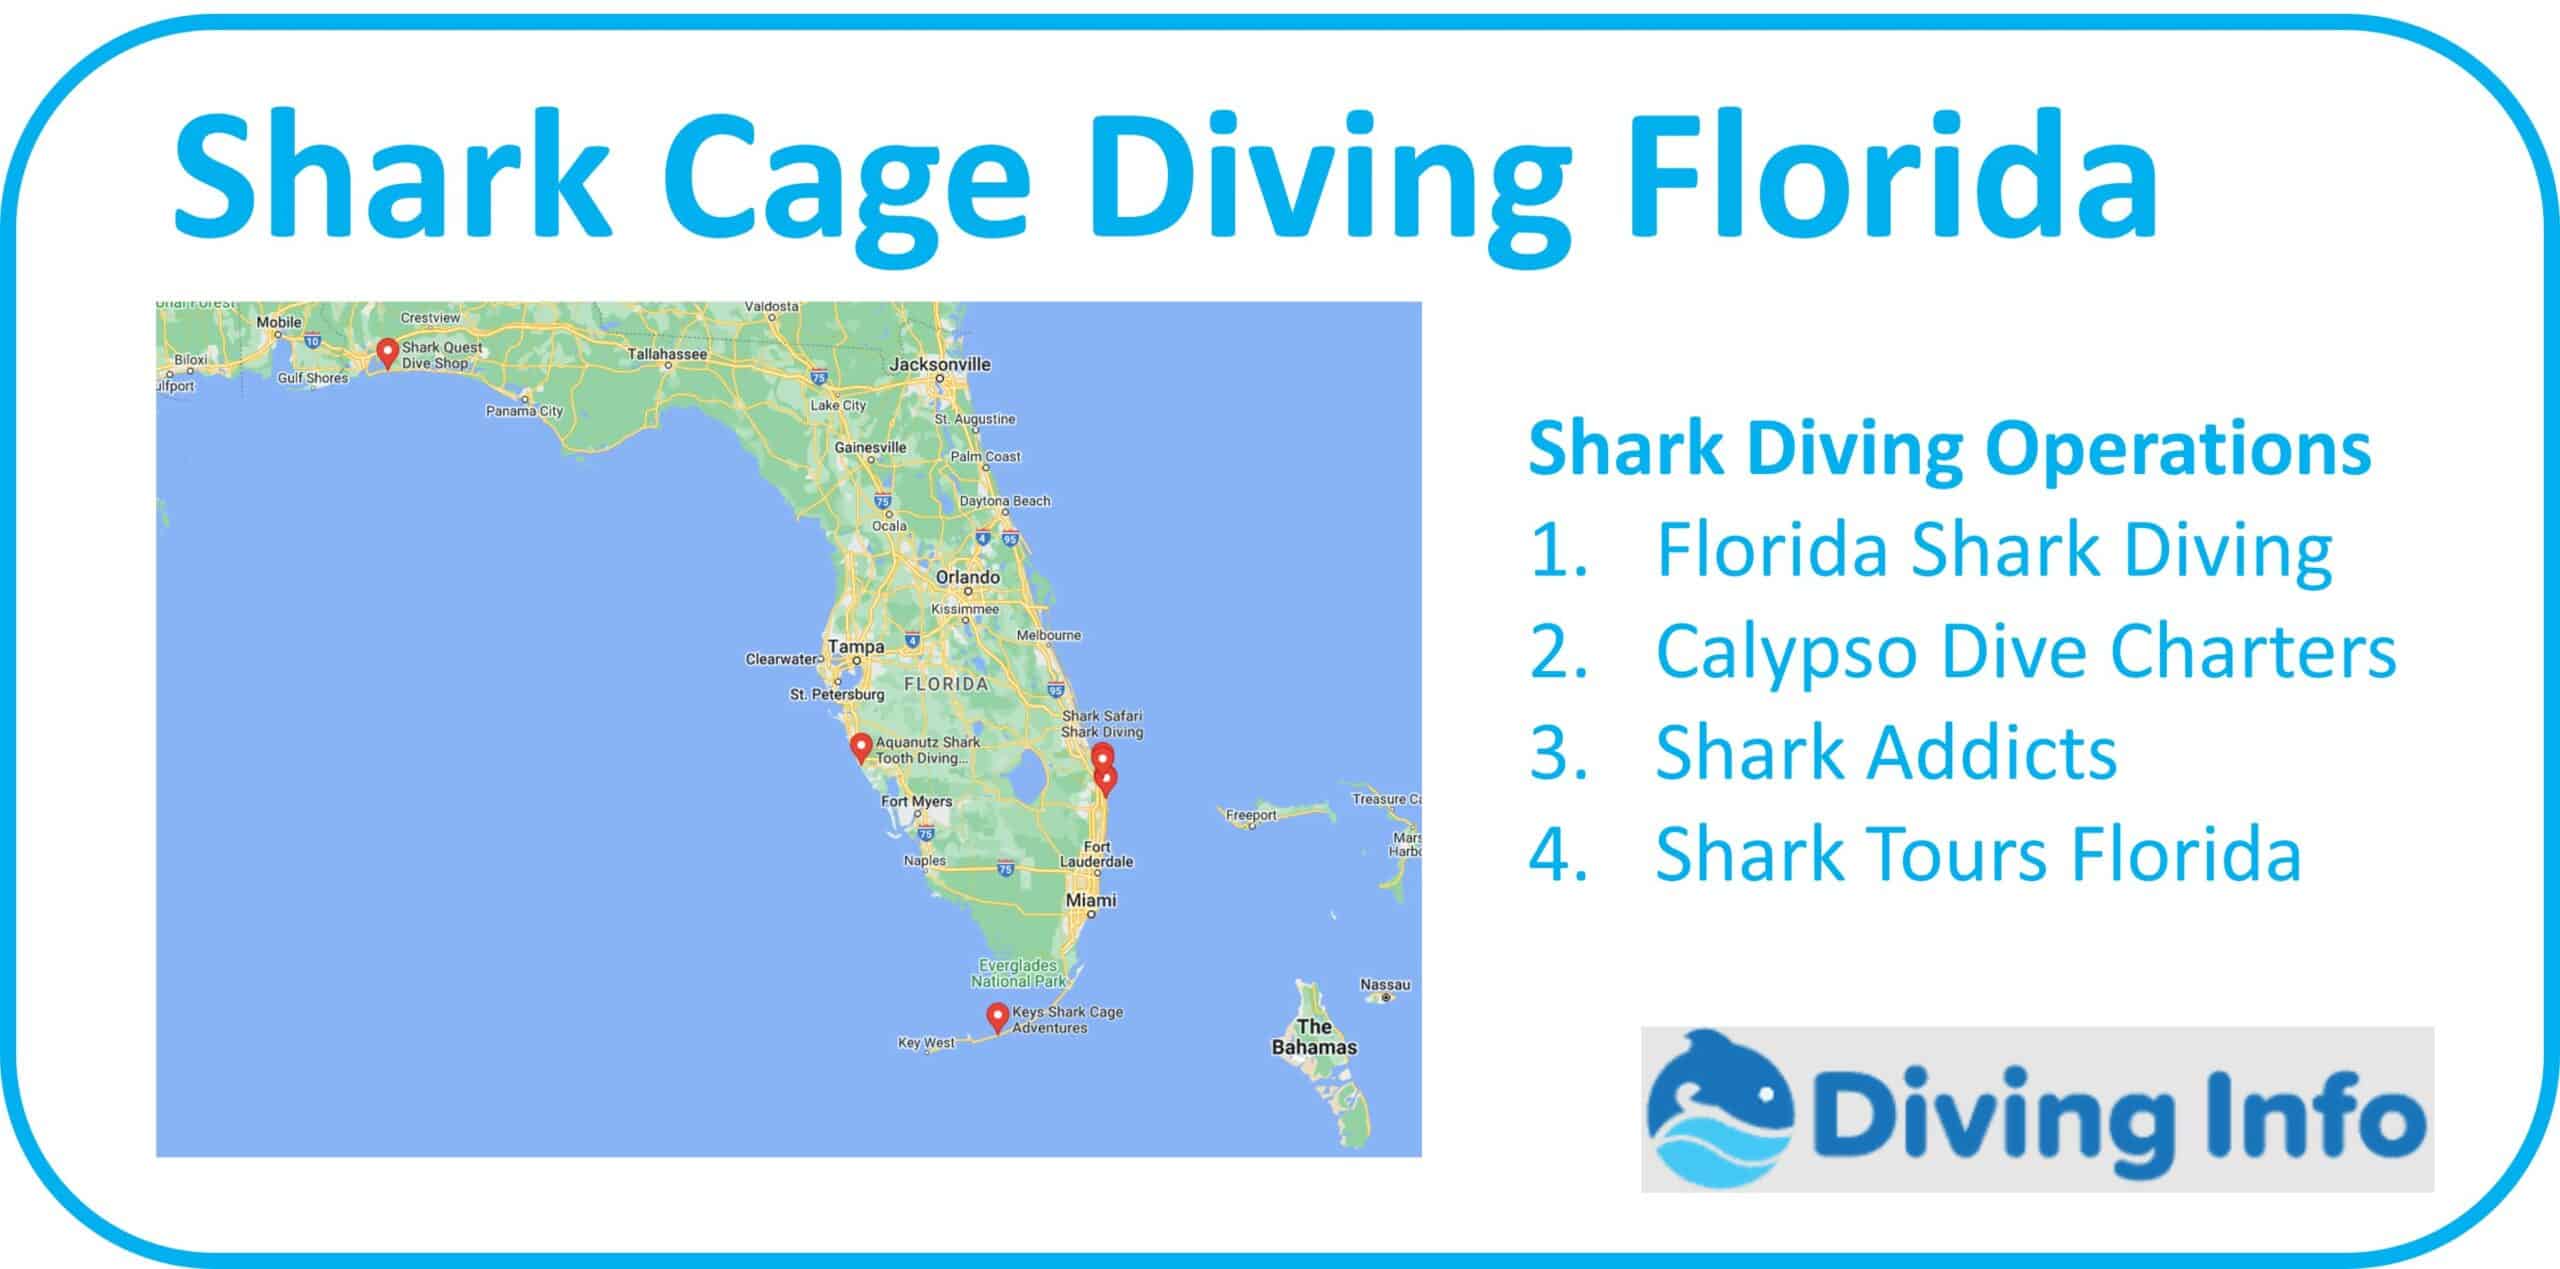 Shark Cage Diving Florida